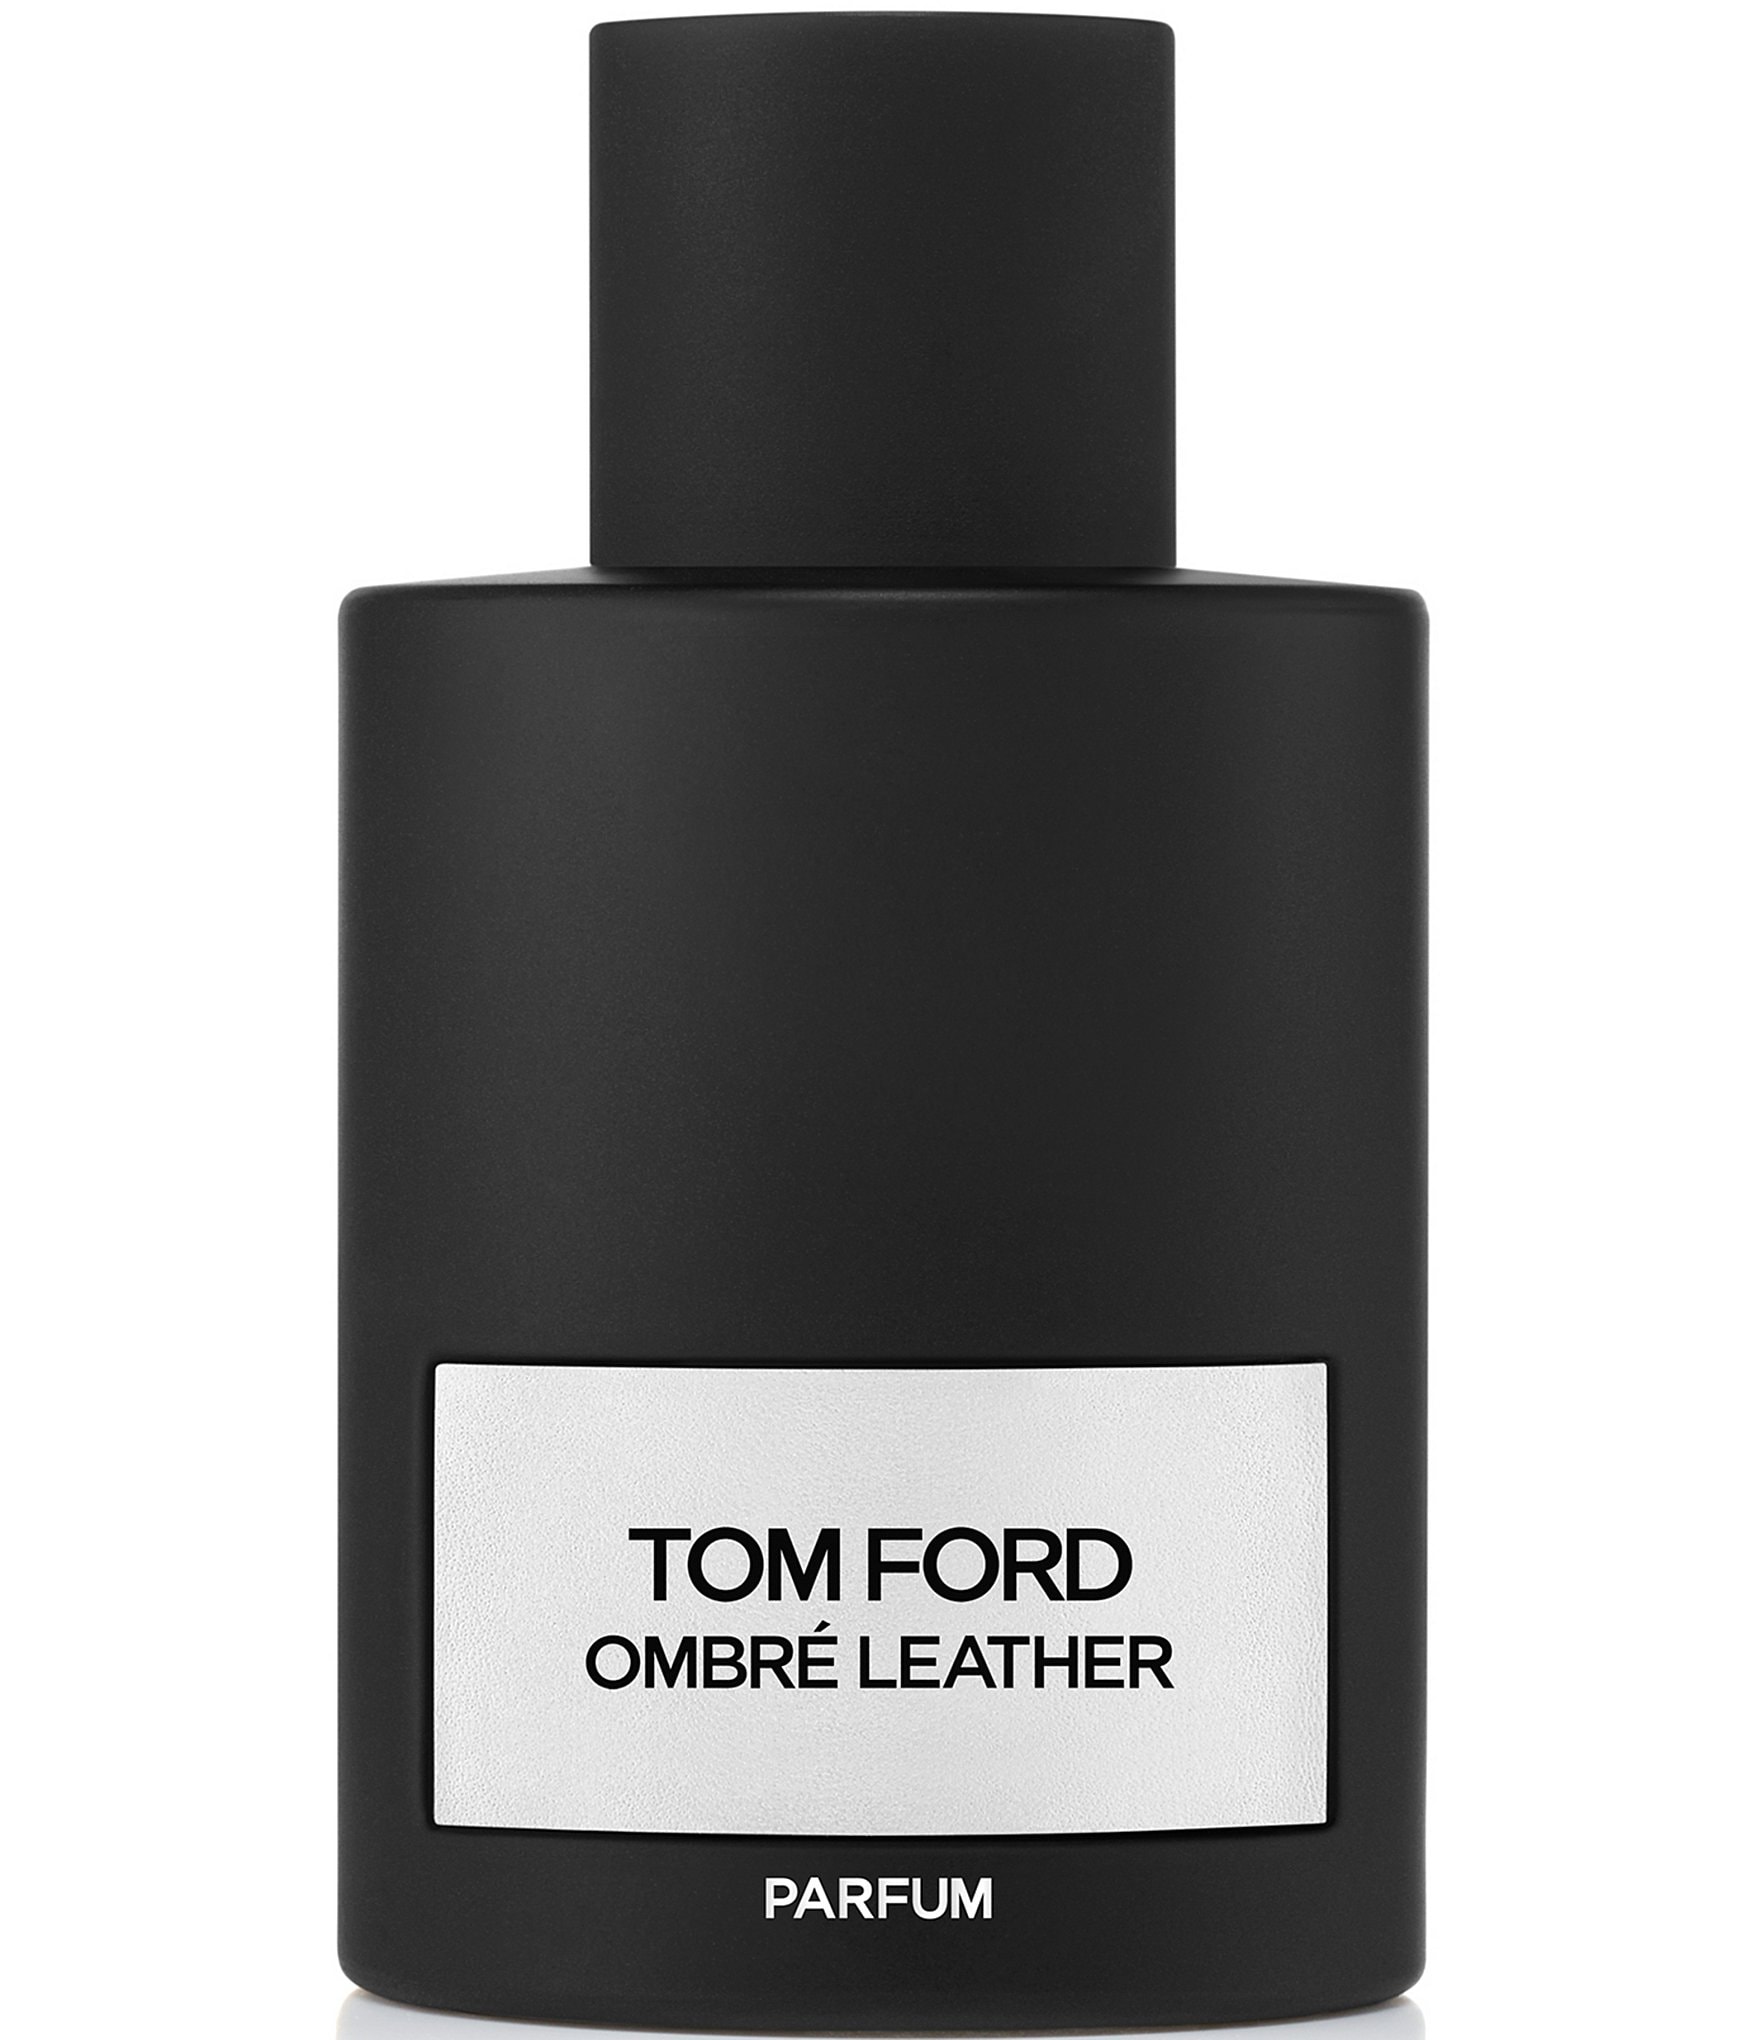 Ombré Leather Eau de Parfum Travel Spray - TOM FORD